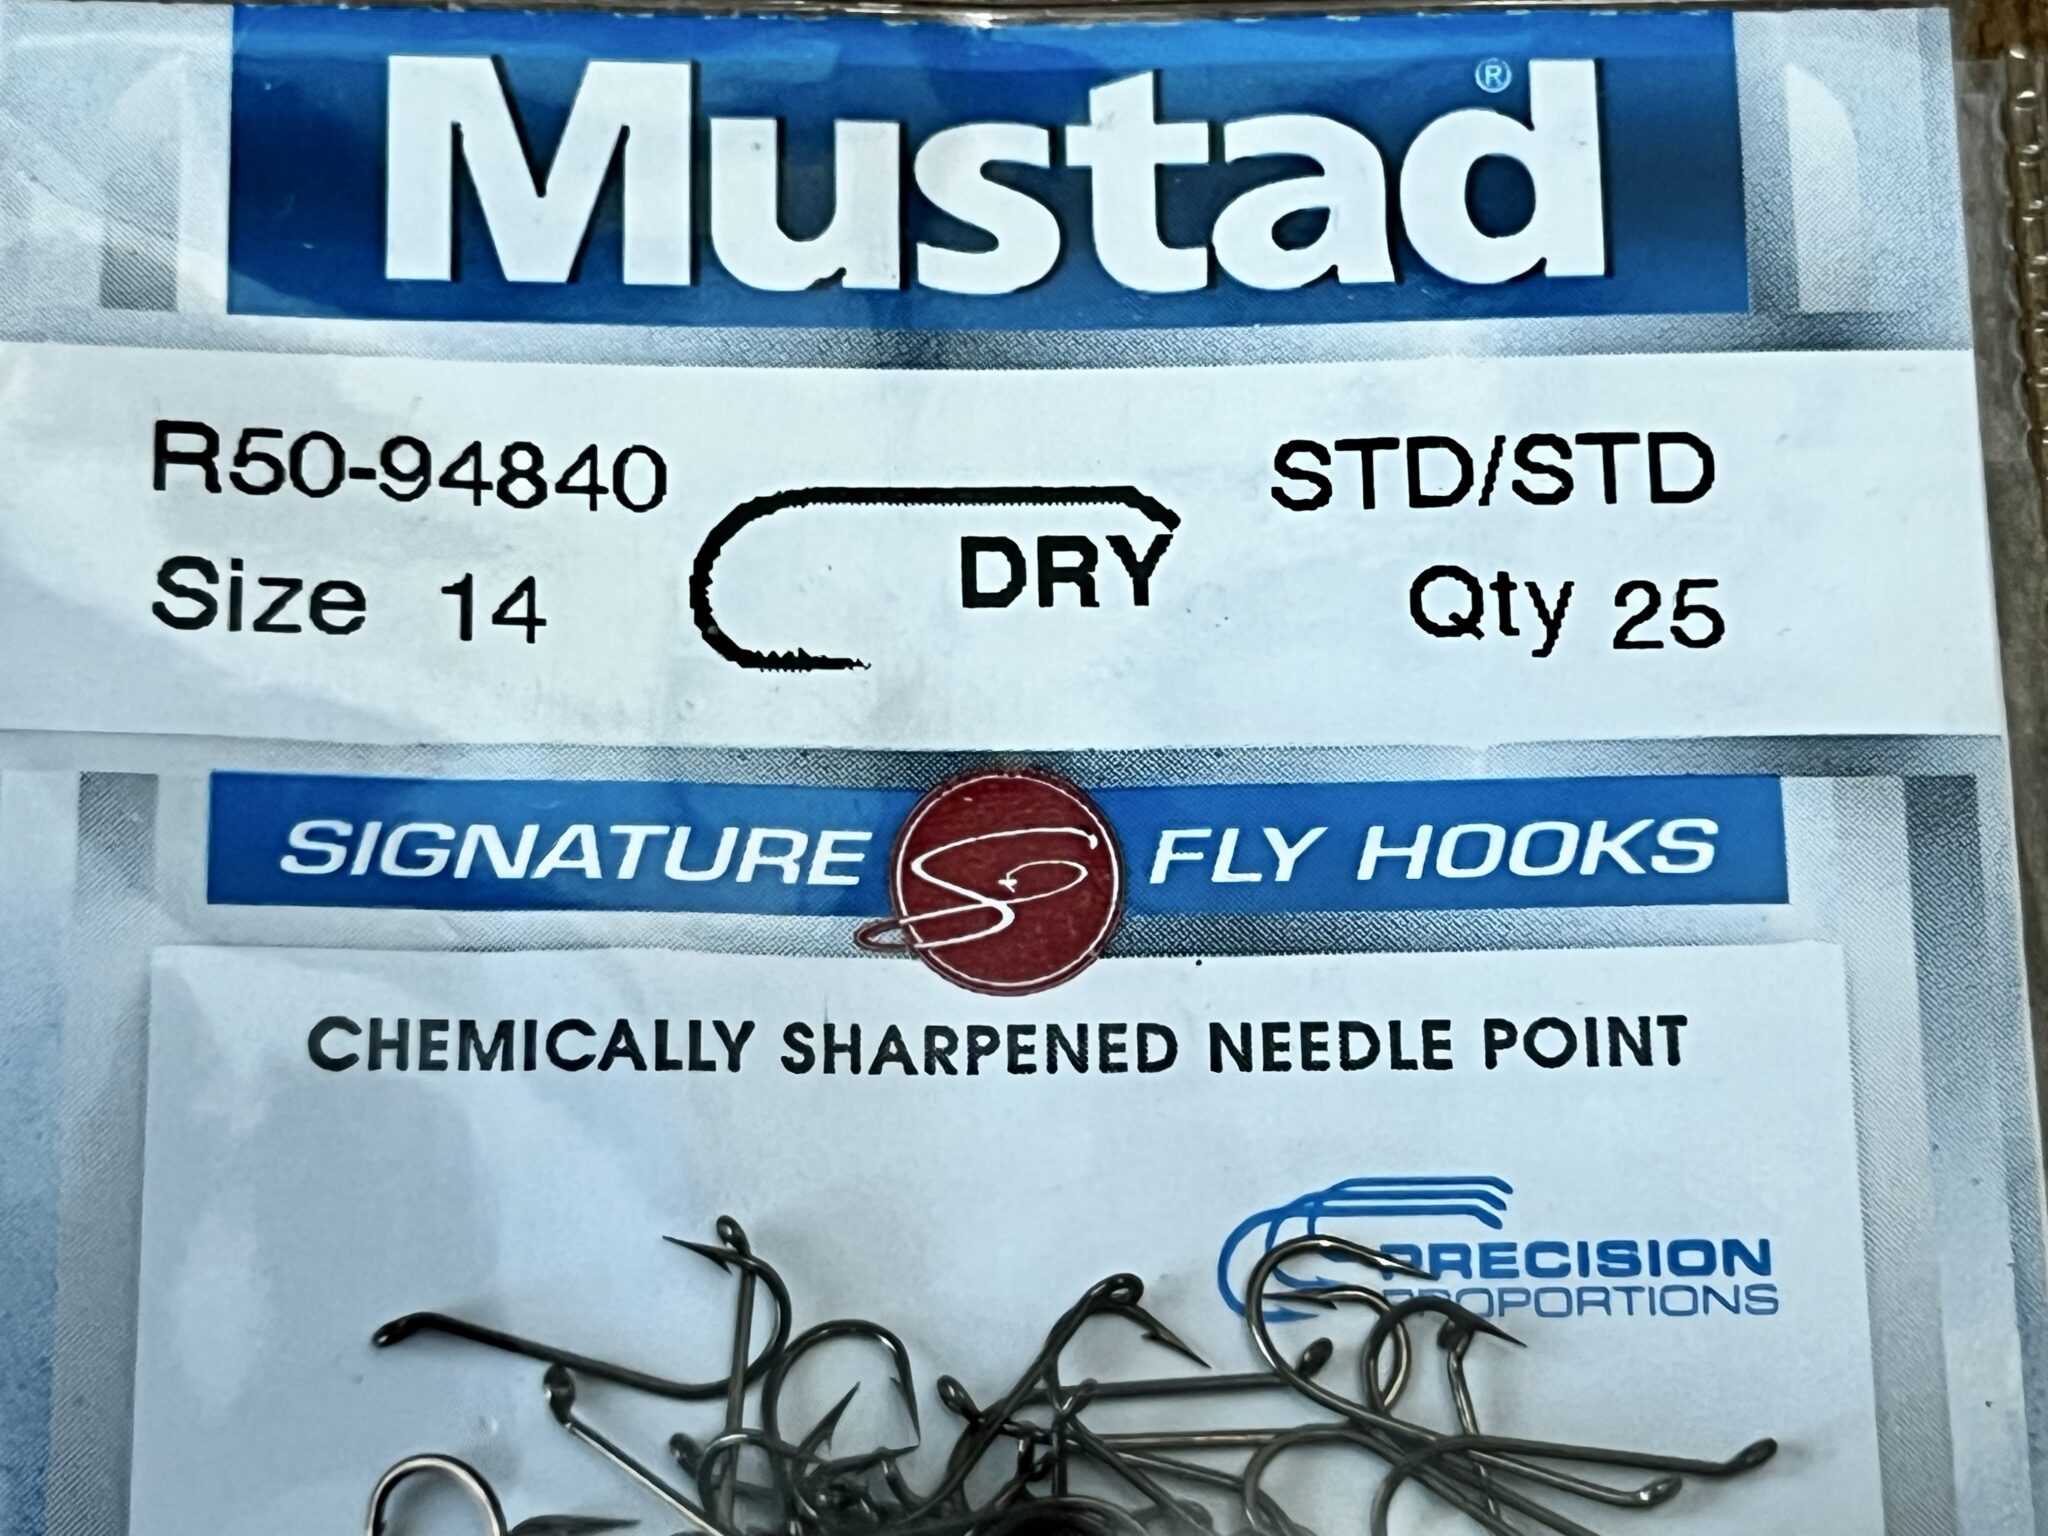 MUSTAD SIGNATURE DRY FLY HOOK